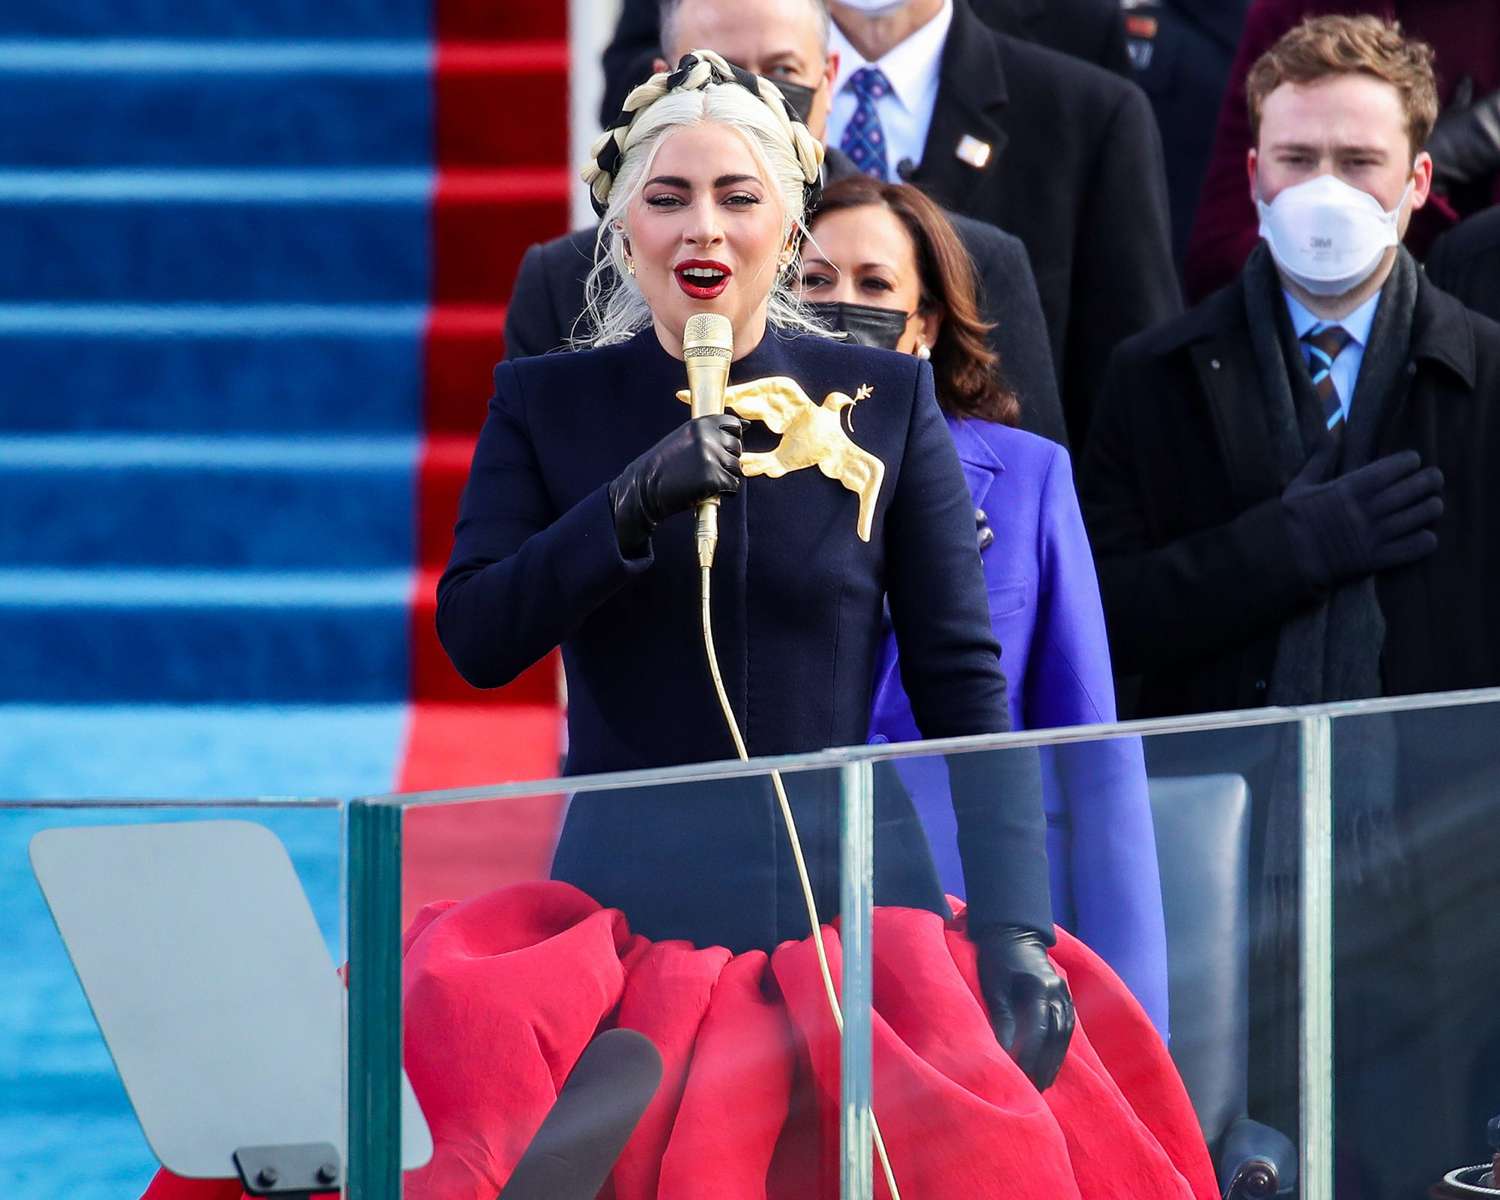 WASHINGTON, DC - JANUARY 20: Lady Gaga arrives to sing the National Anthem at the inauguration of U.S. President-elect Joe Biden